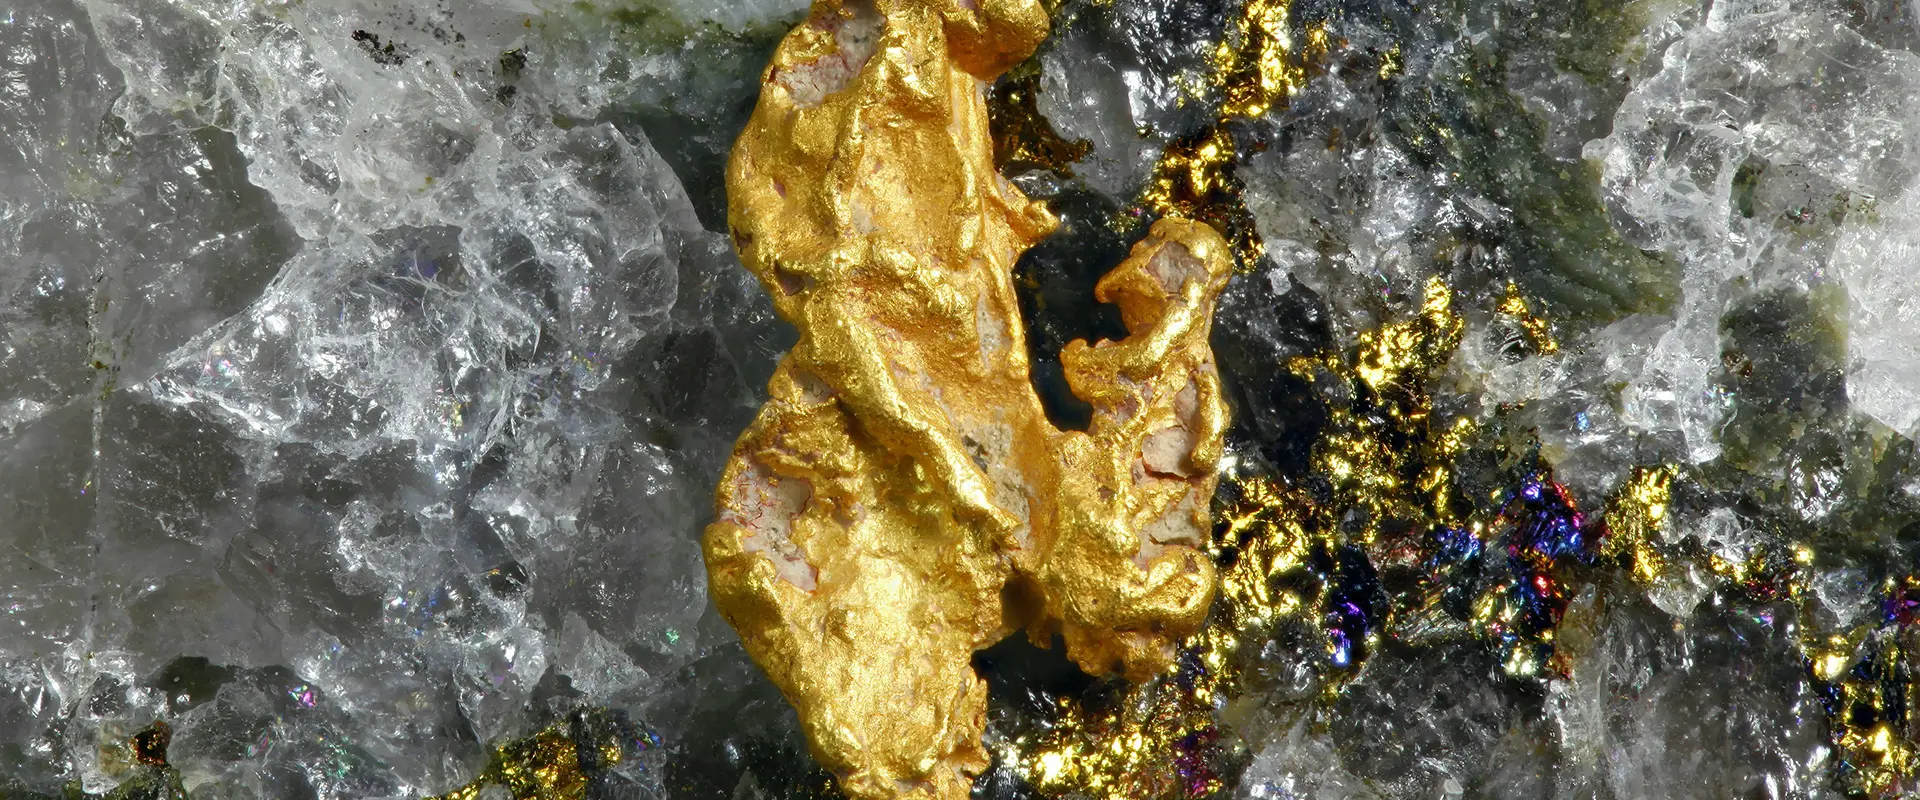 Gold nugget and quartz, Finland